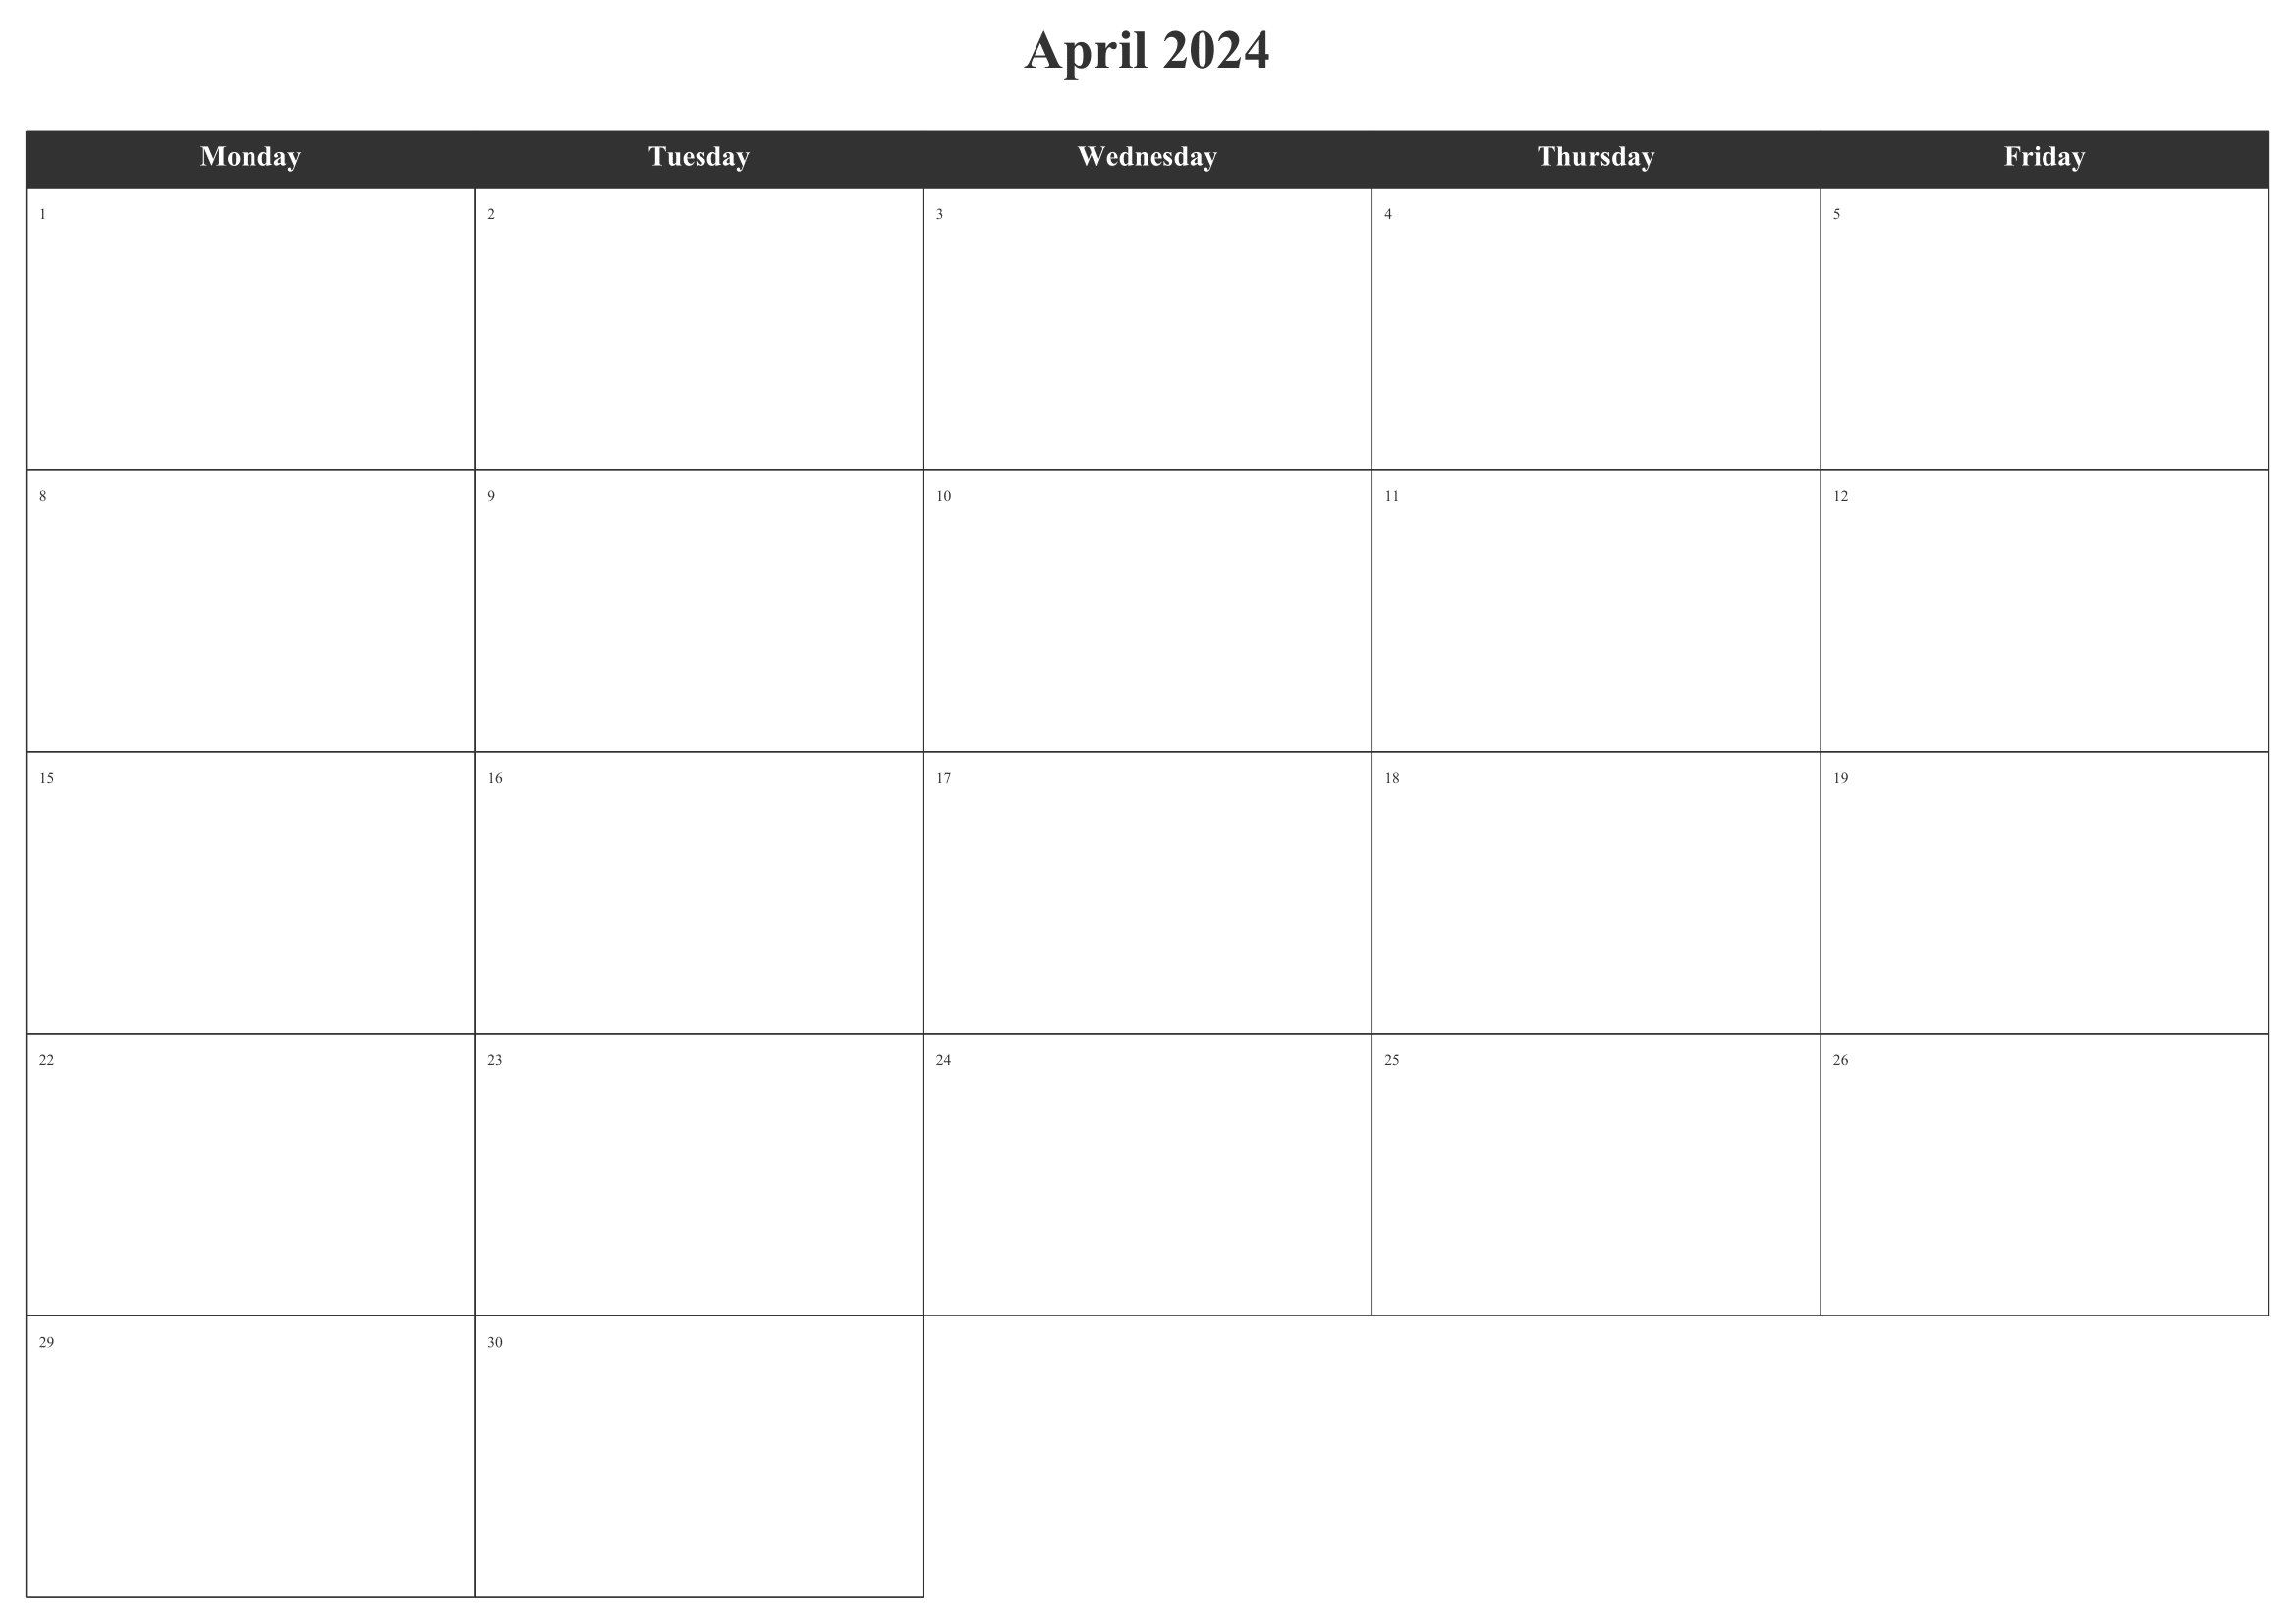 Monthly calendar - Working weeks